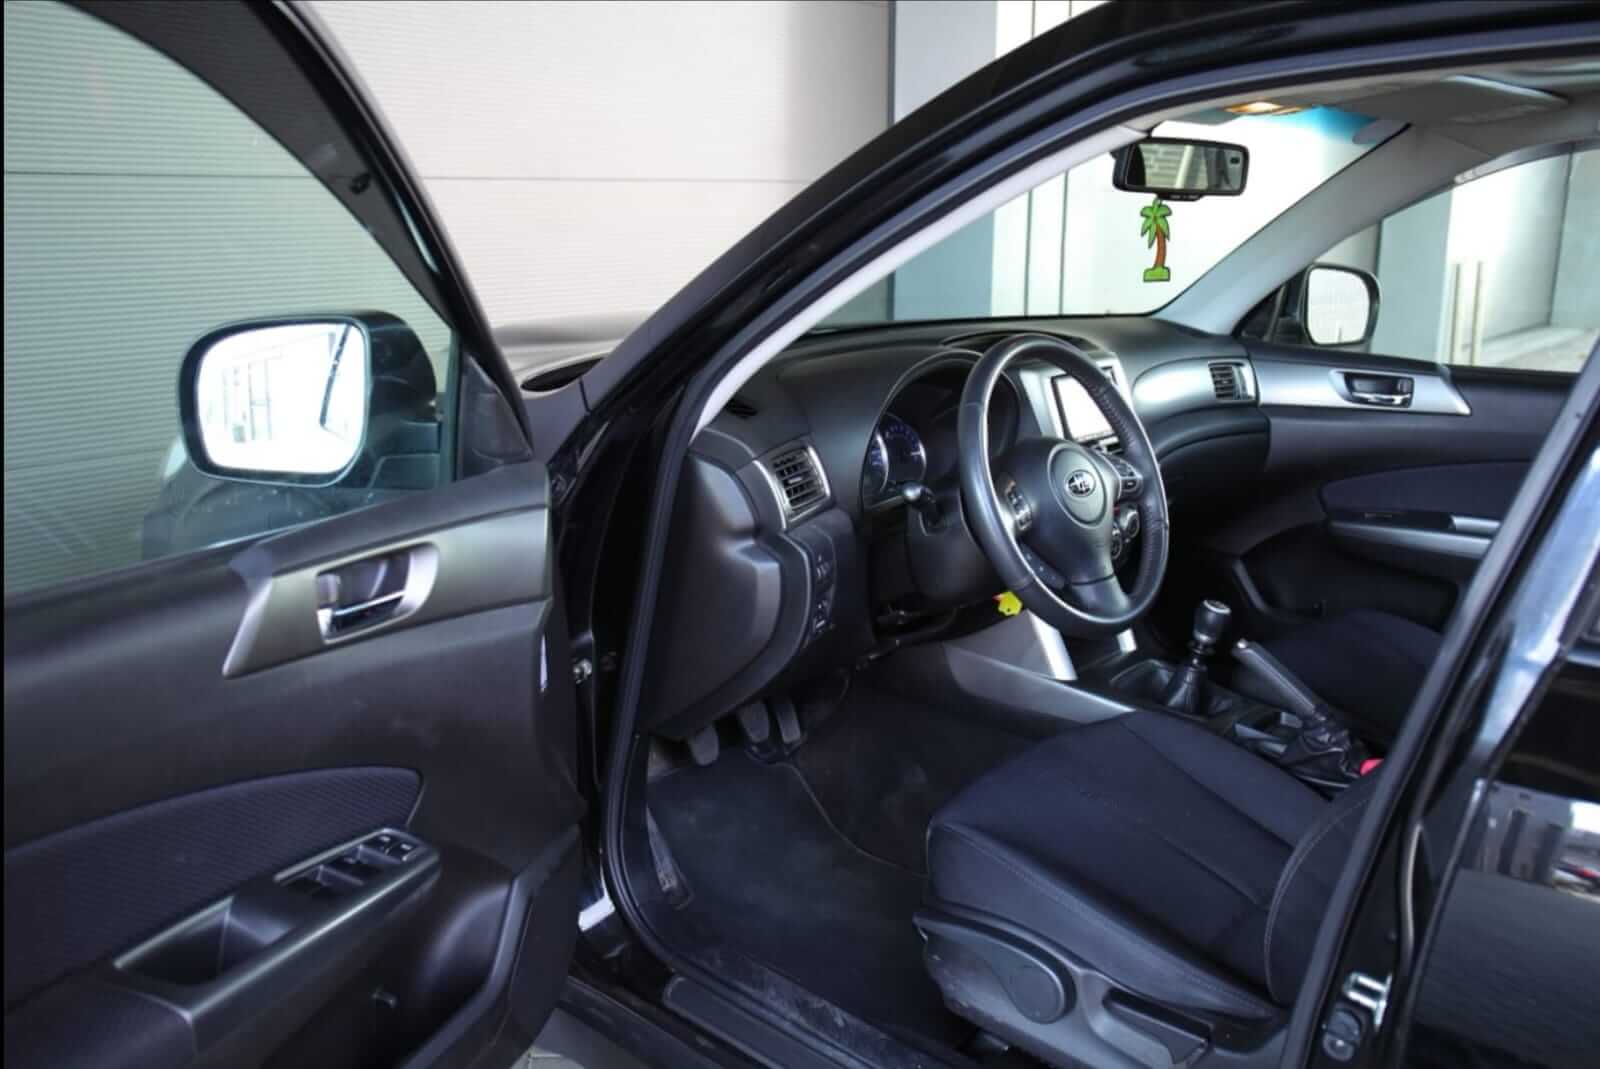 Subaru Forester front interior 2 – by Next Level Automotive – Go to nextlevelautomotive.eu